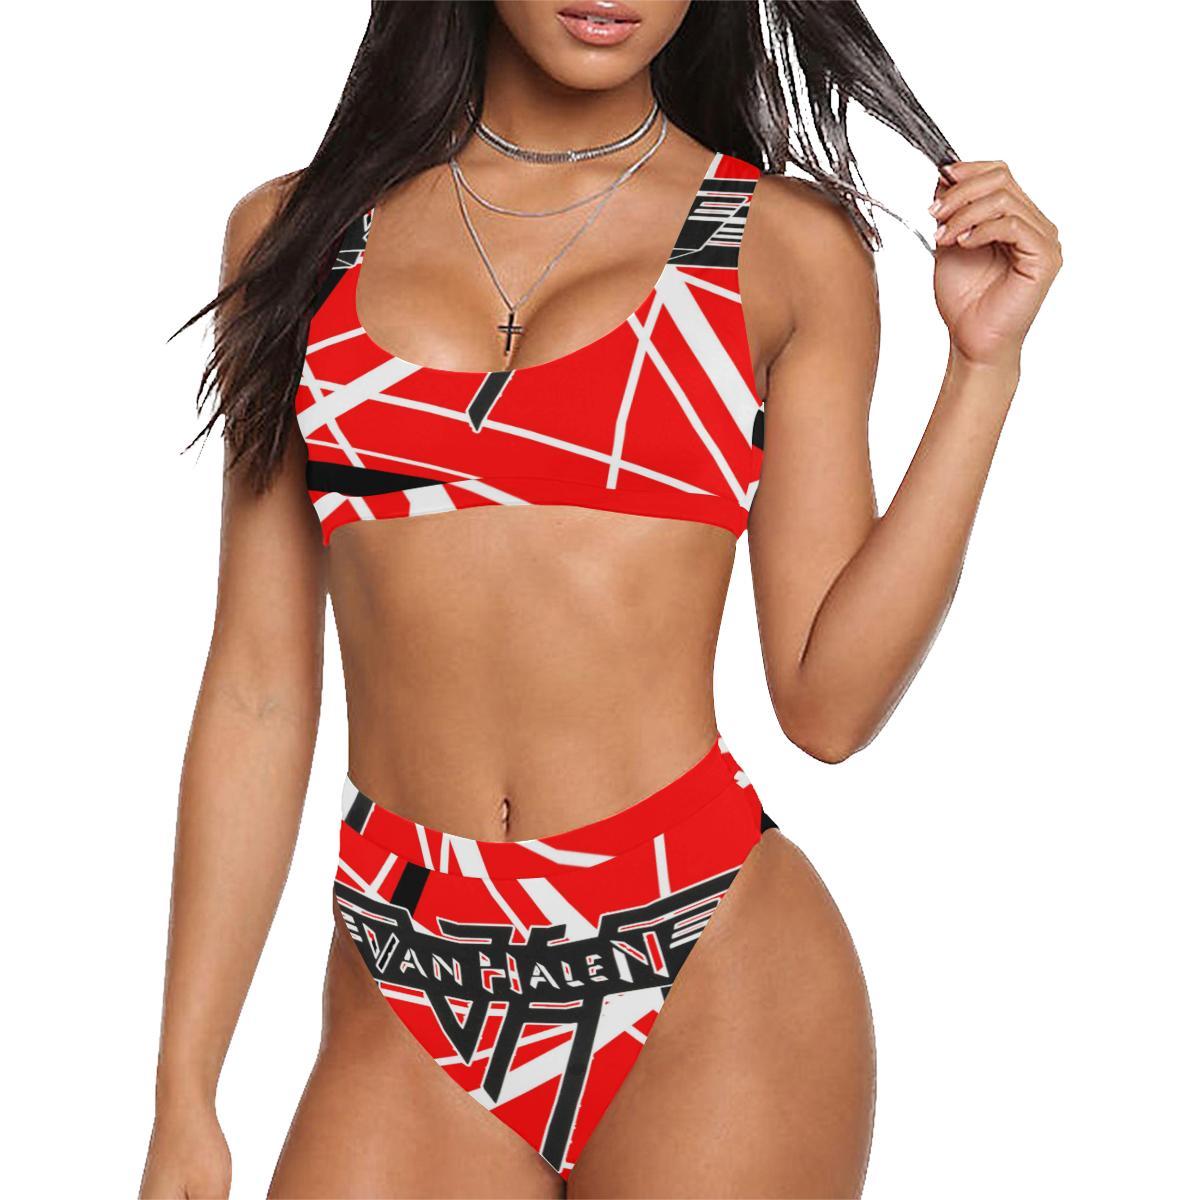 Oakland Raiders Sport Top & High-Waisted Bikini Swimsuit – Model S07